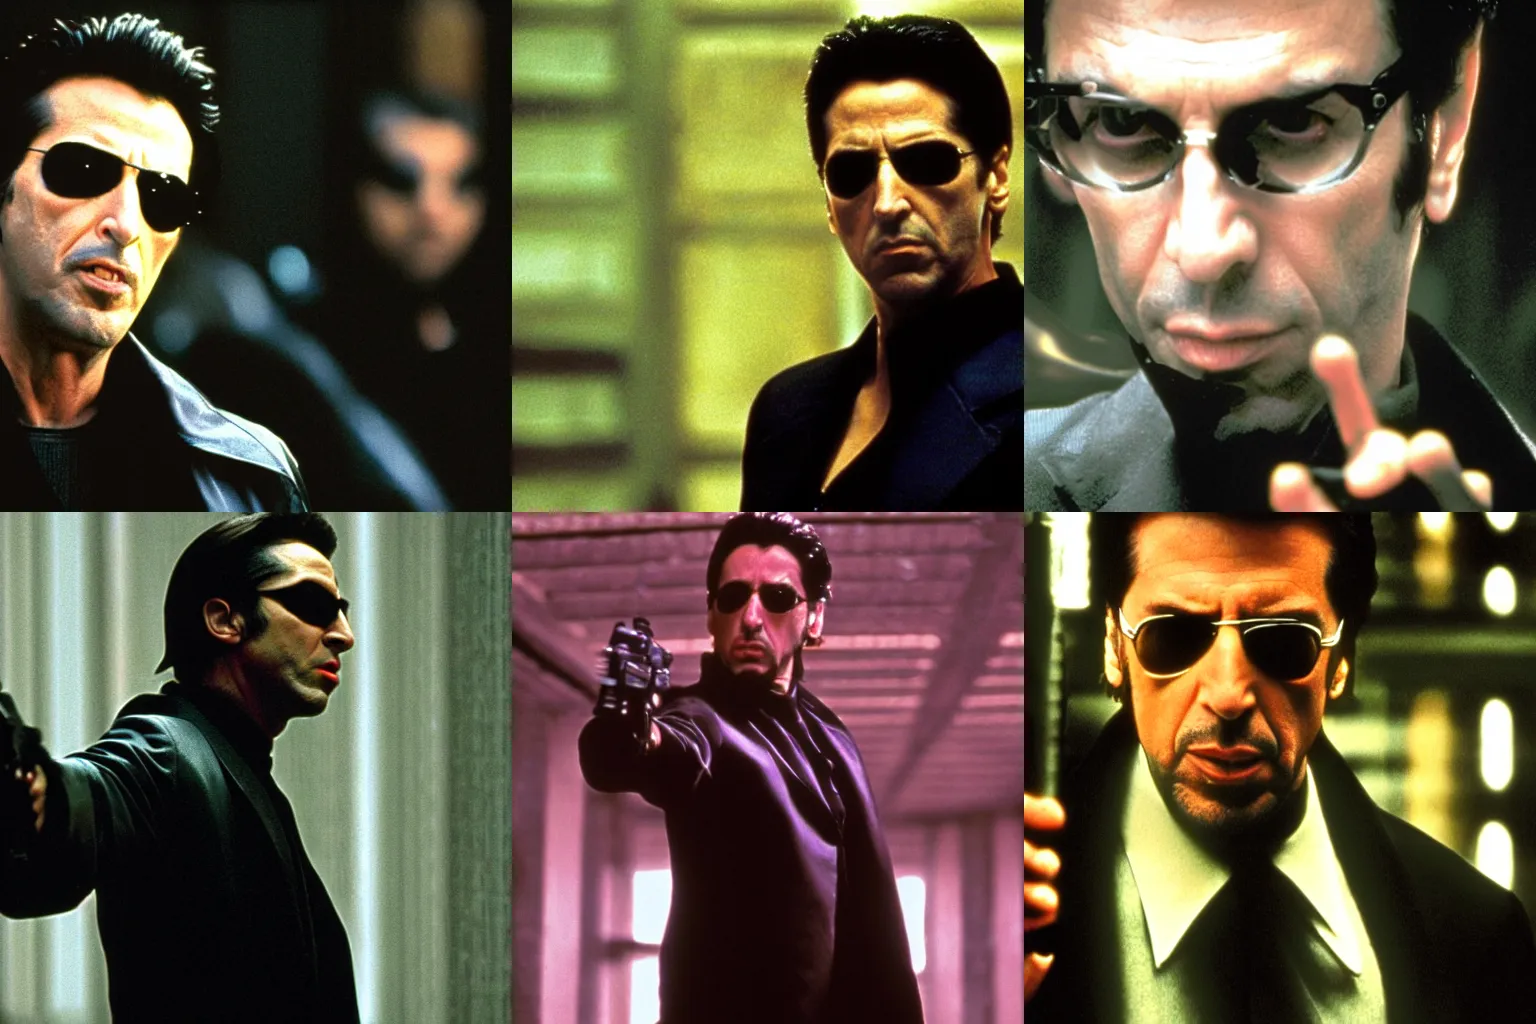 Prompt: Al Pacino as neo in the matrix, wide shot.